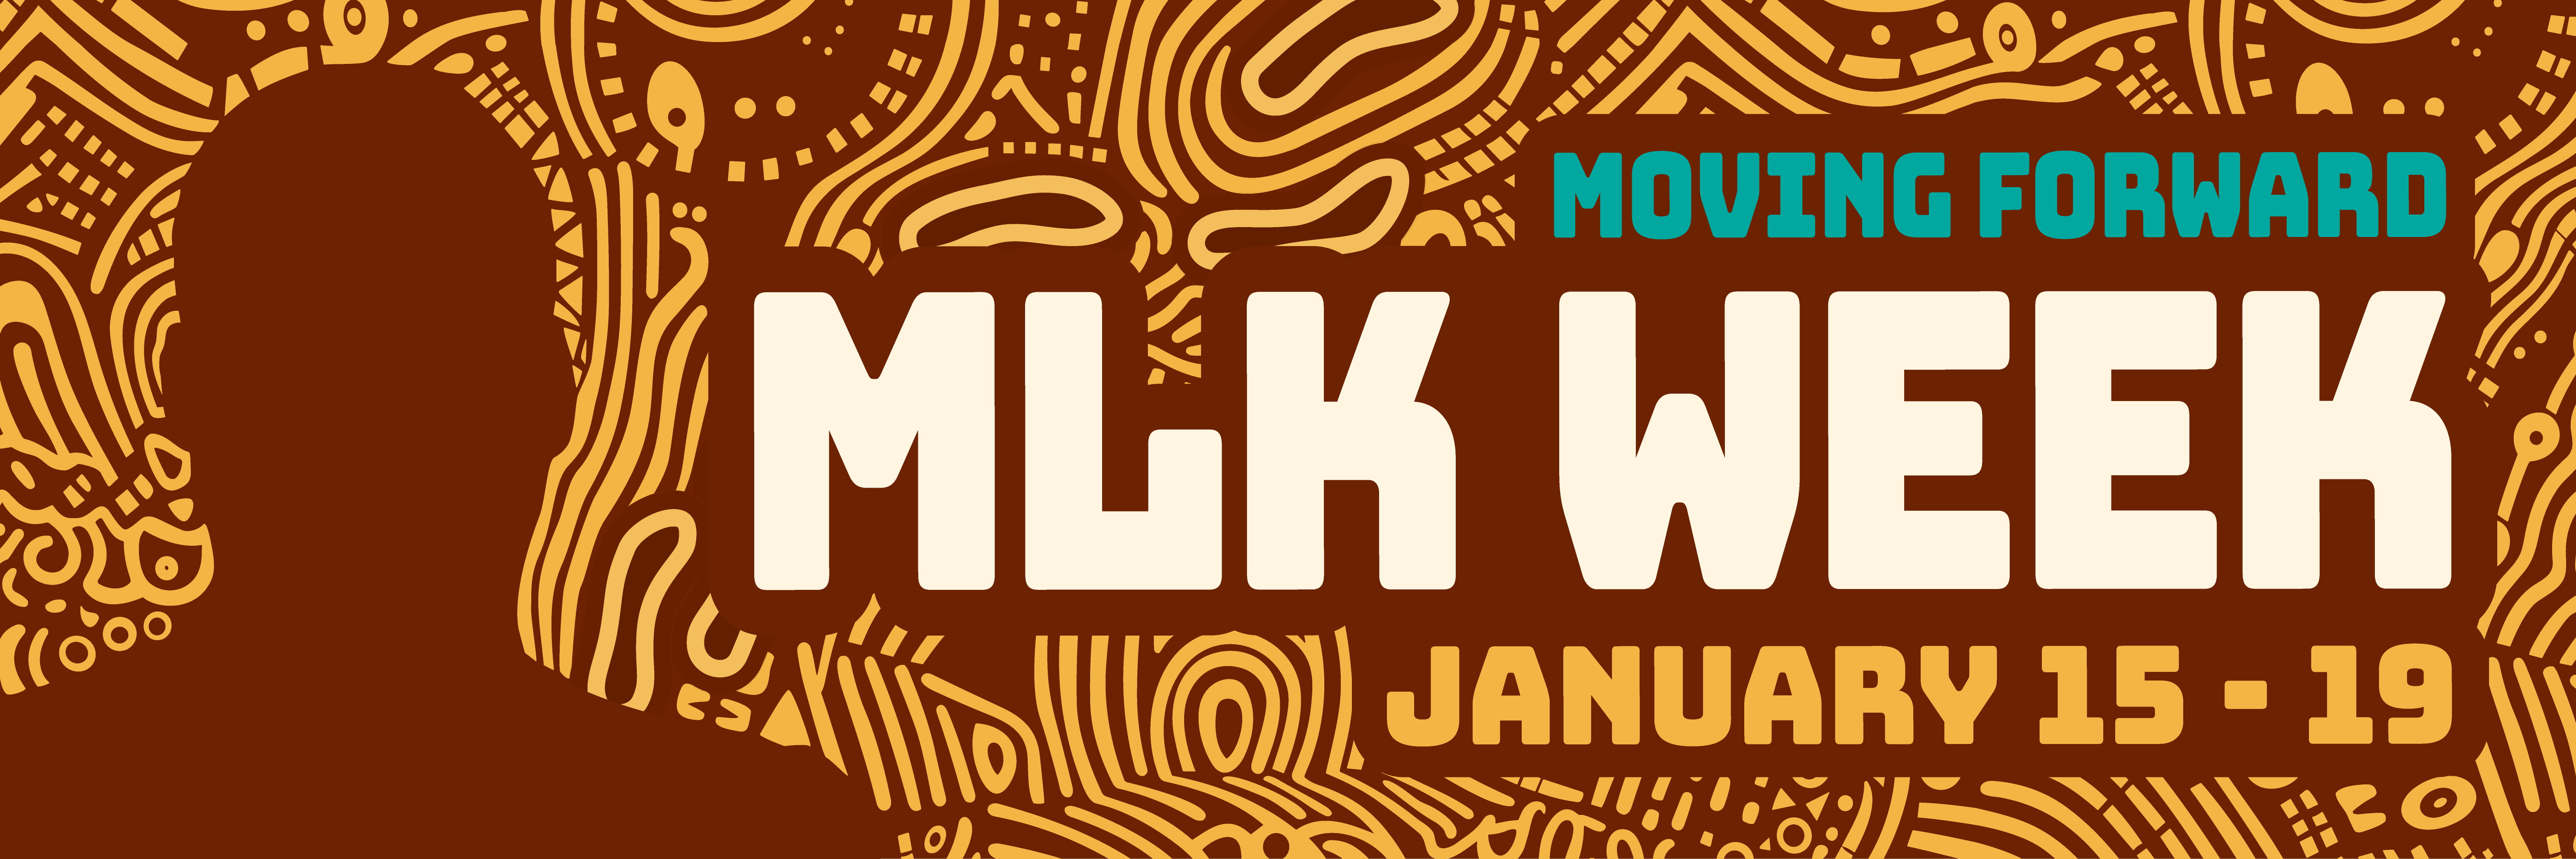 MLK week banner moving forward January 15-19